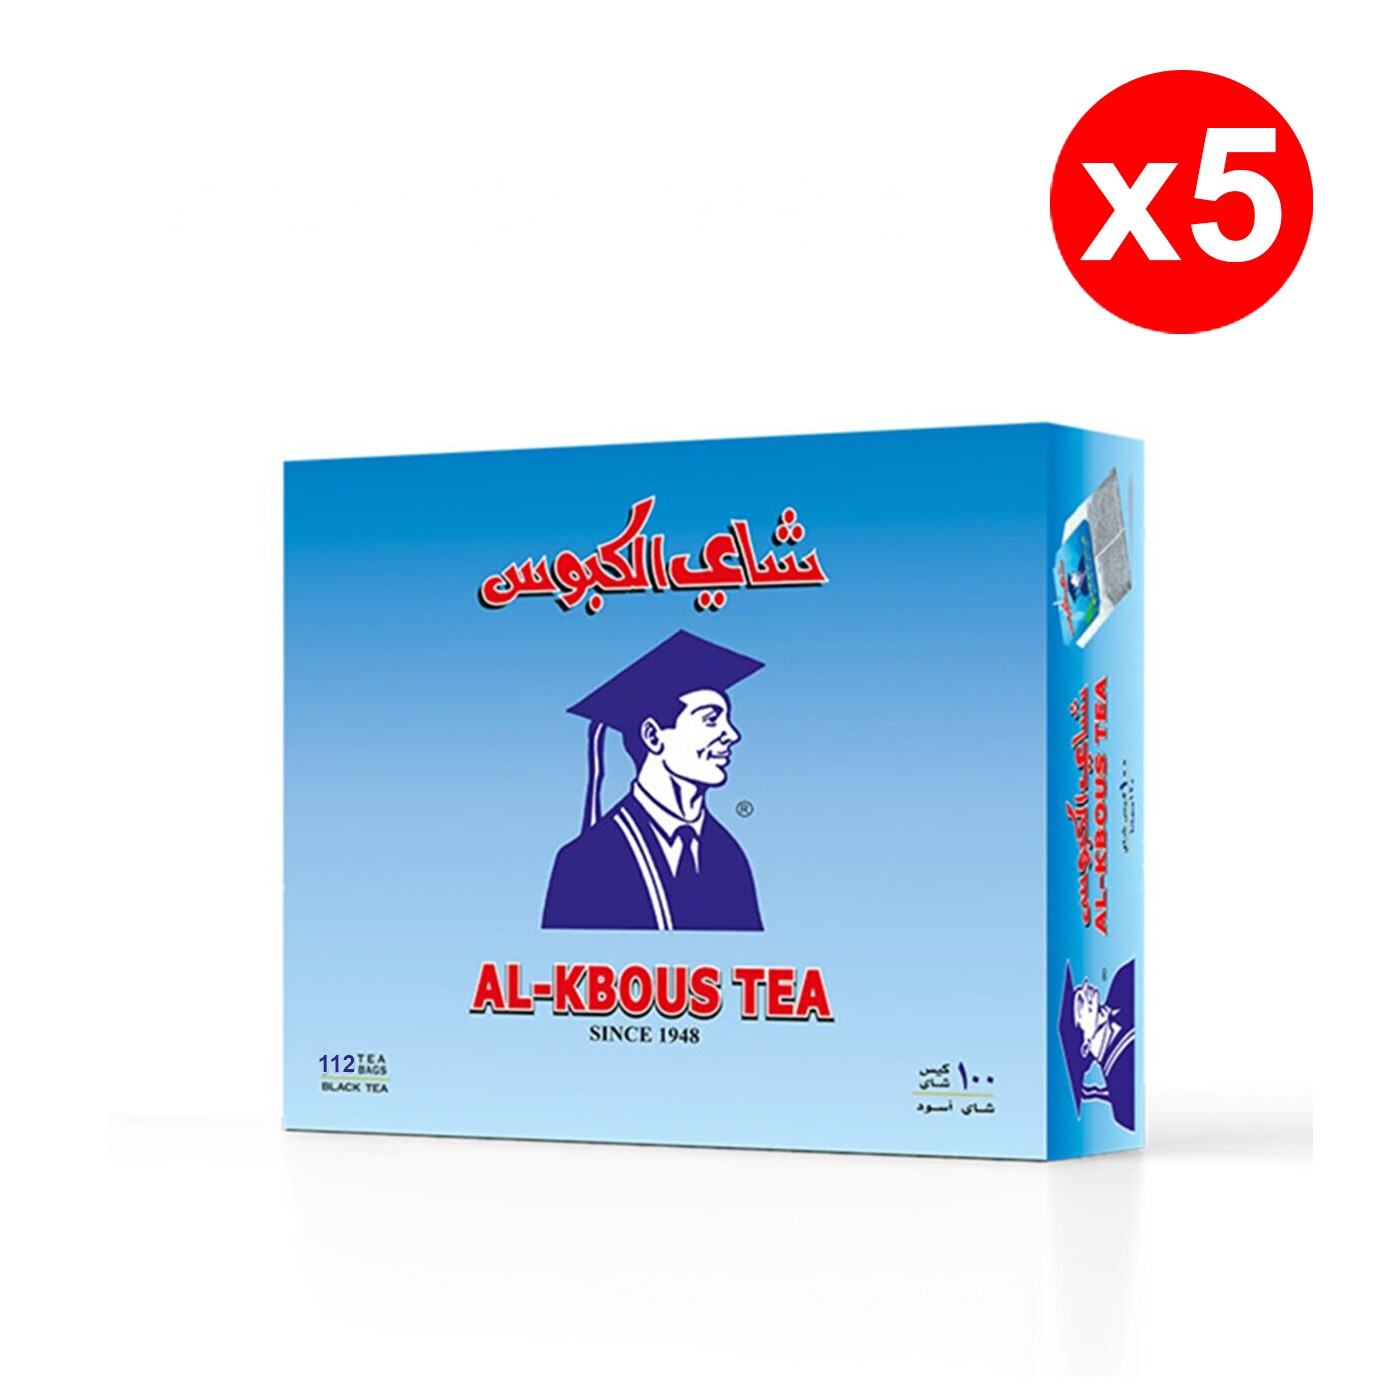 AL-KBOUS BLACK TEA 100-PACK TEA 5 BAGS